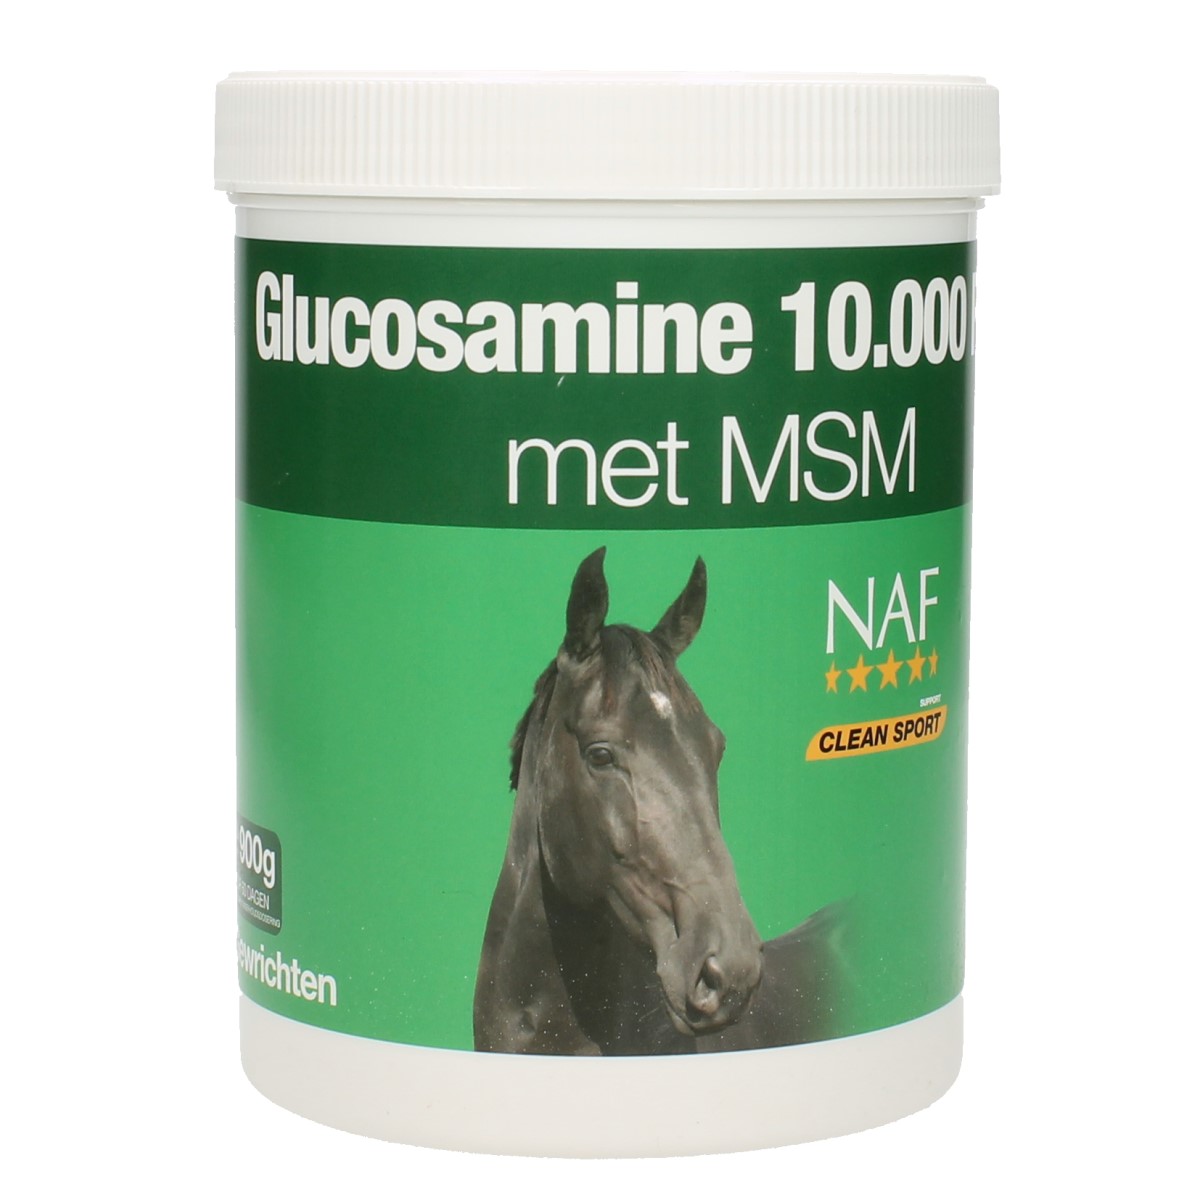 naf-glucosamine-10-000-plus_2000x2000_213014.jpg